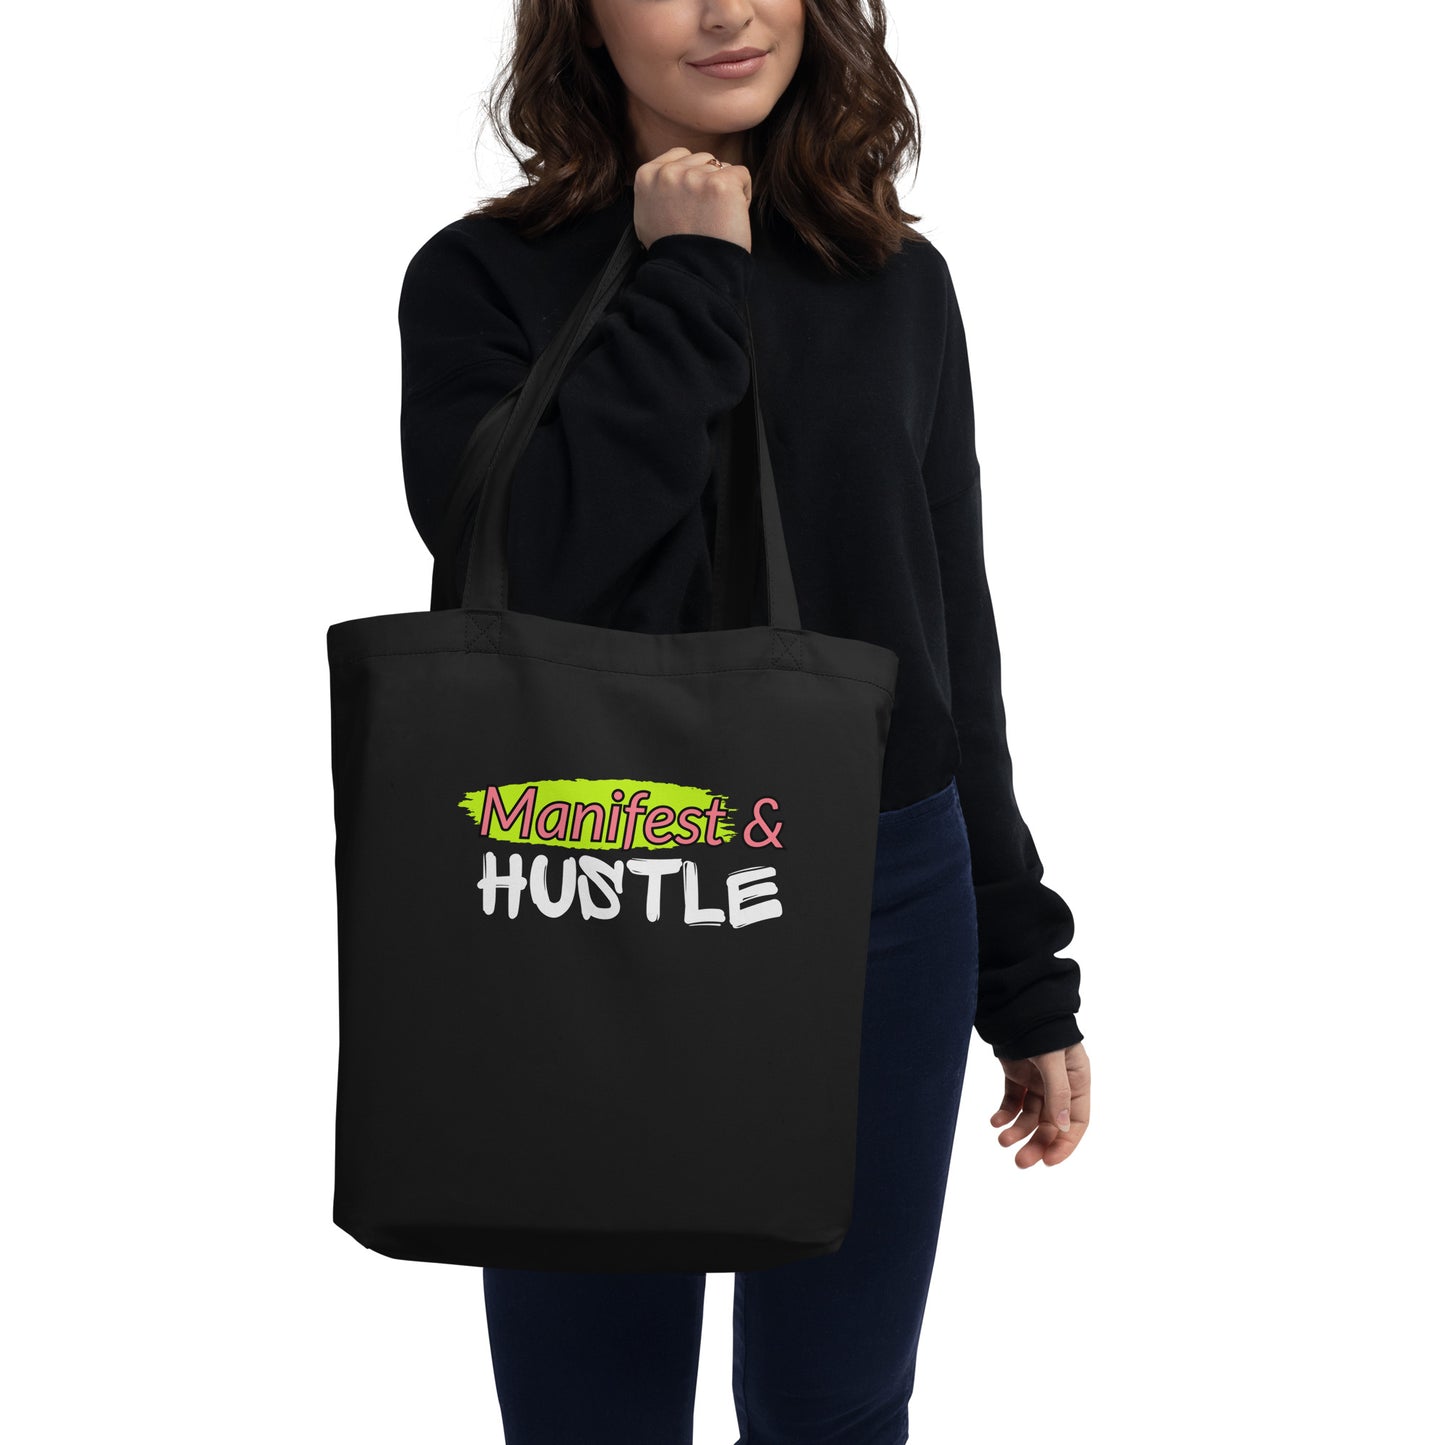 Manifest & Hustle Eco Tote Bag